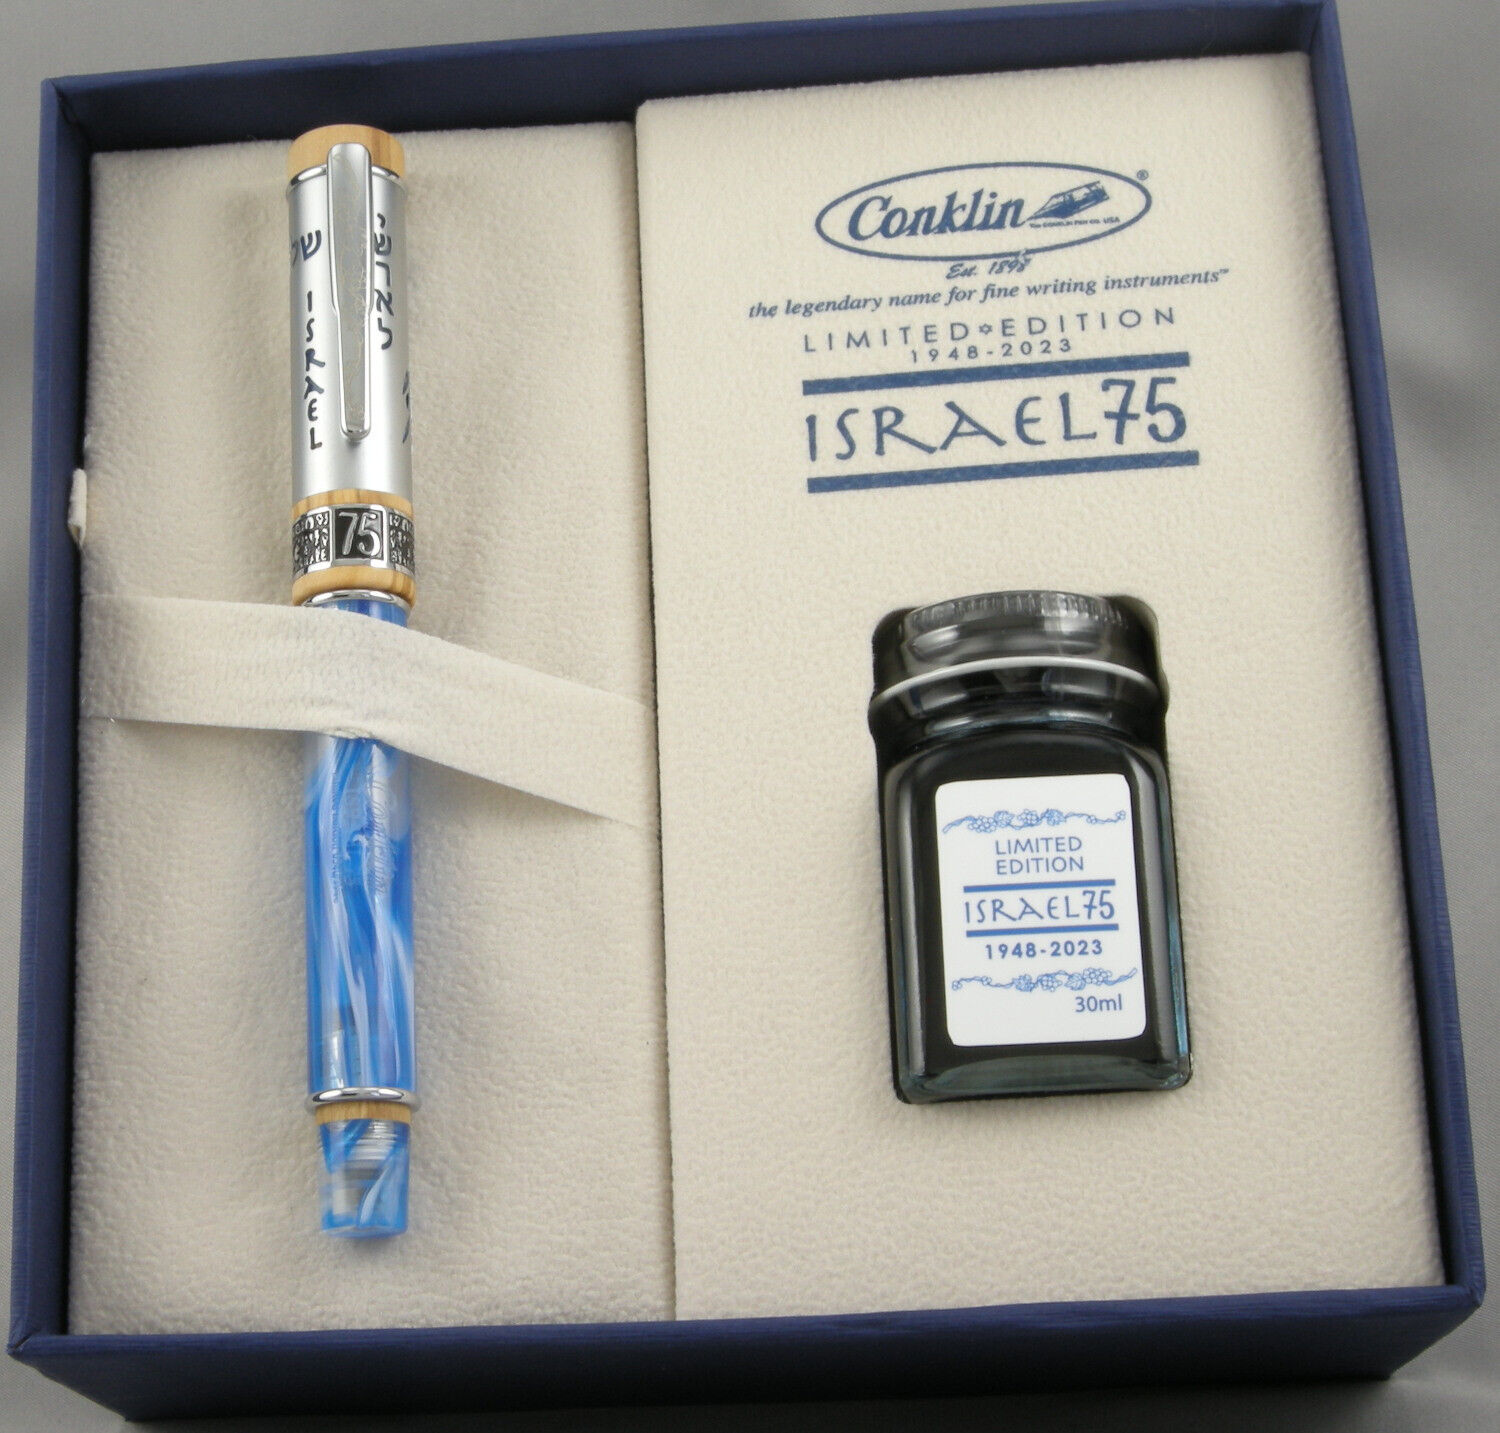 Conklin Israel 75 Limited Edition Fountain Pen Set - New - Medium Nib